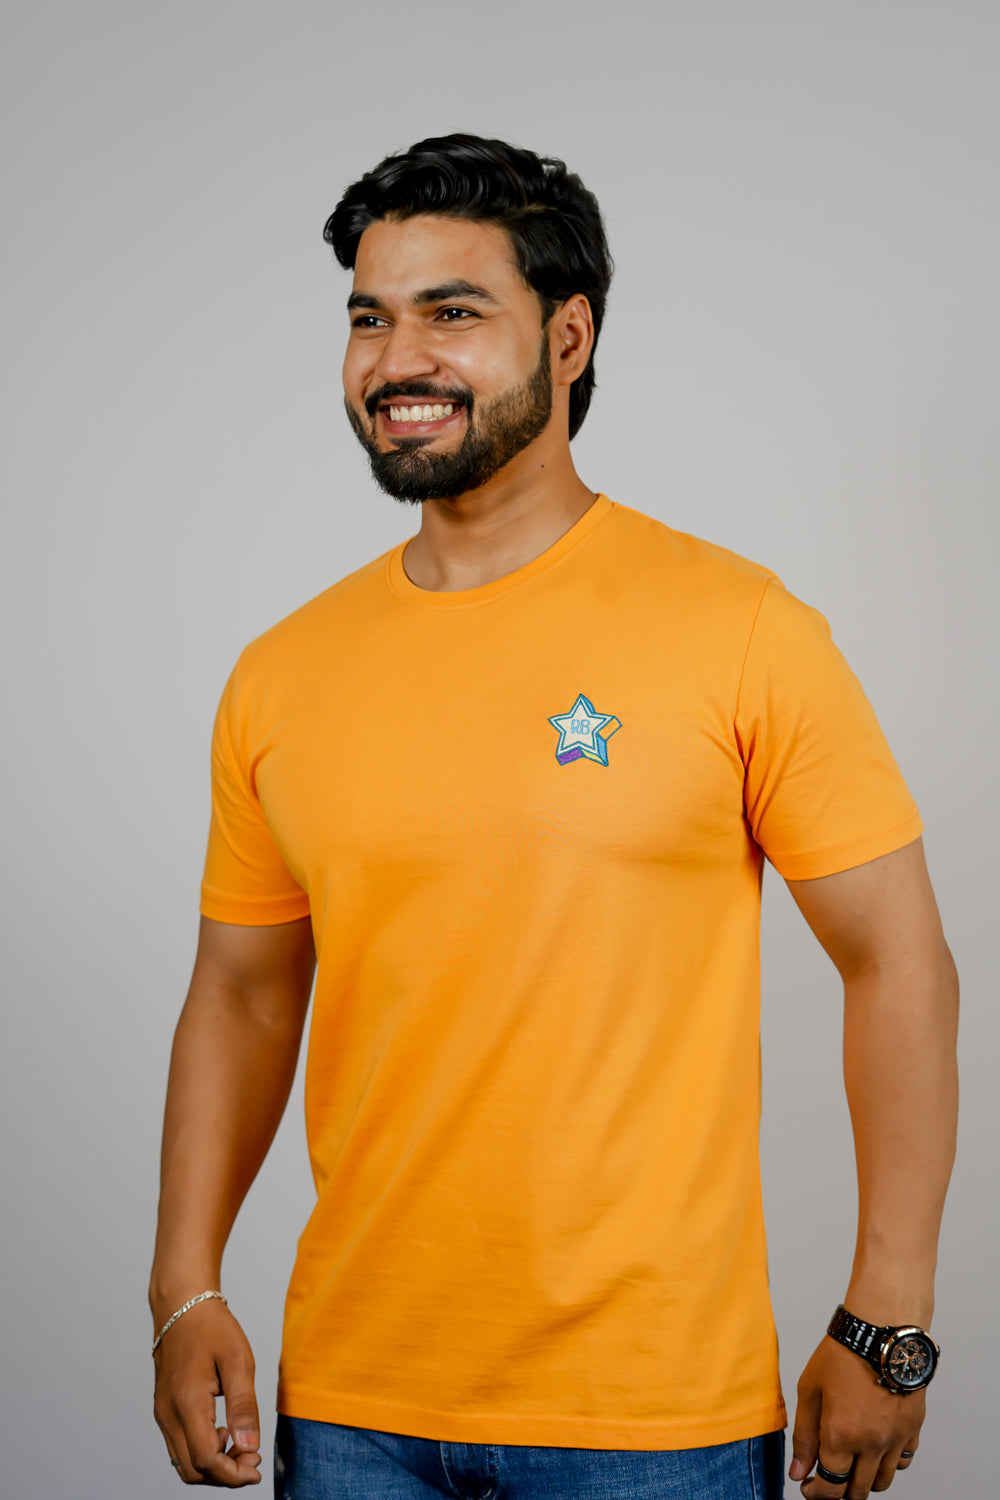 Rarebond's EMB Yellow Half Sleeve Comfort Fit T-shirt